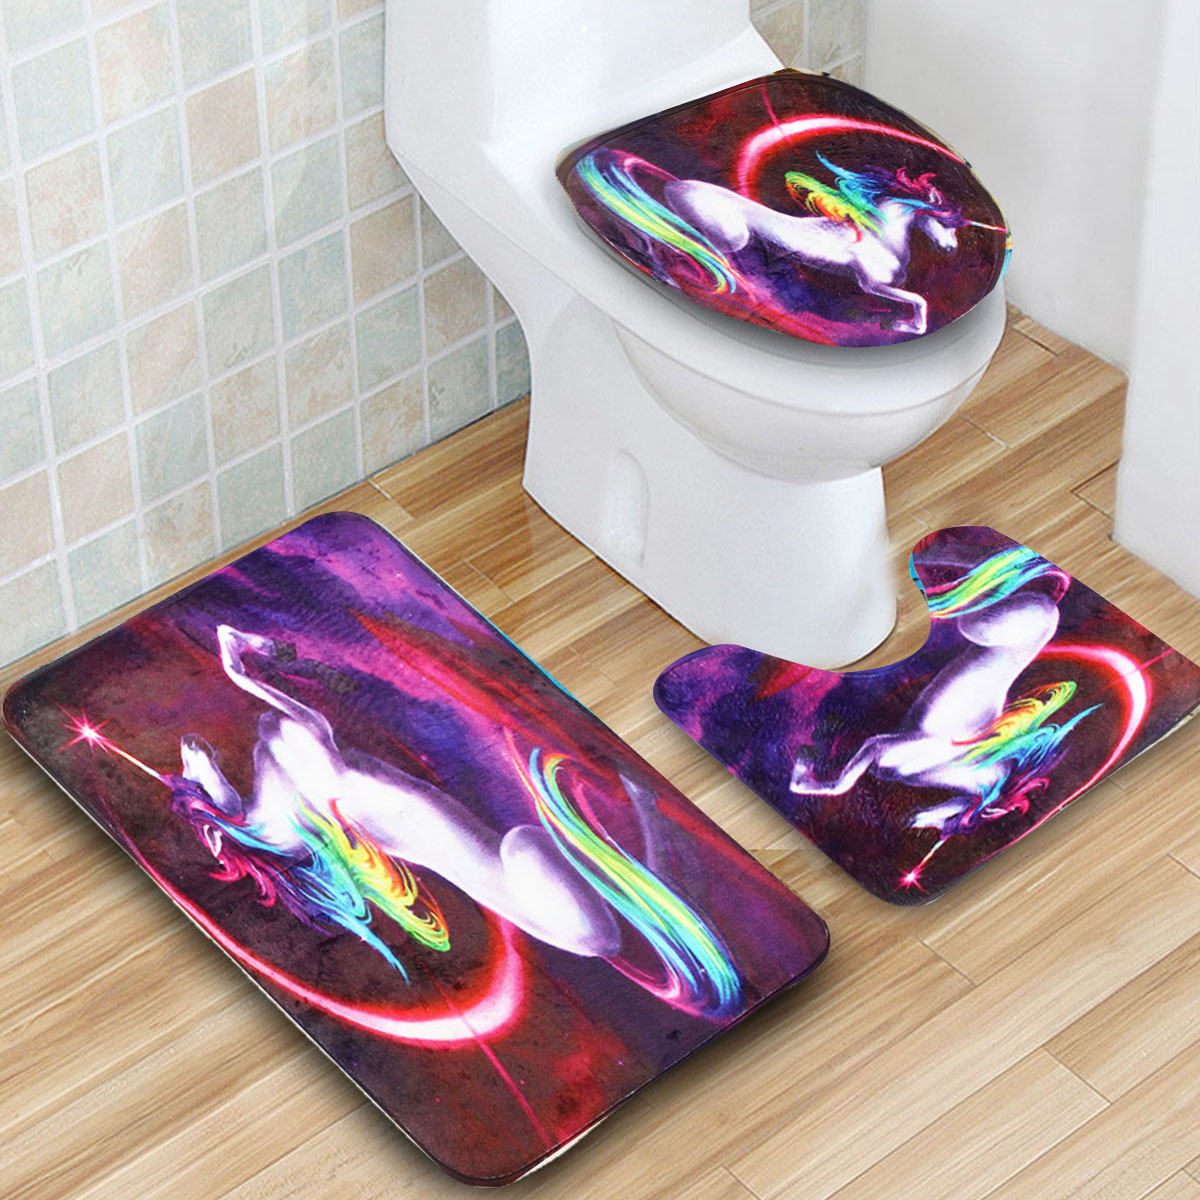 3PCS-Colorful-Horse-Bathroom-Non-Slip-Pedestal-Rugs-Pads-Lid-Toilet-Seat-Covers-Bath-Mats-1415899-2